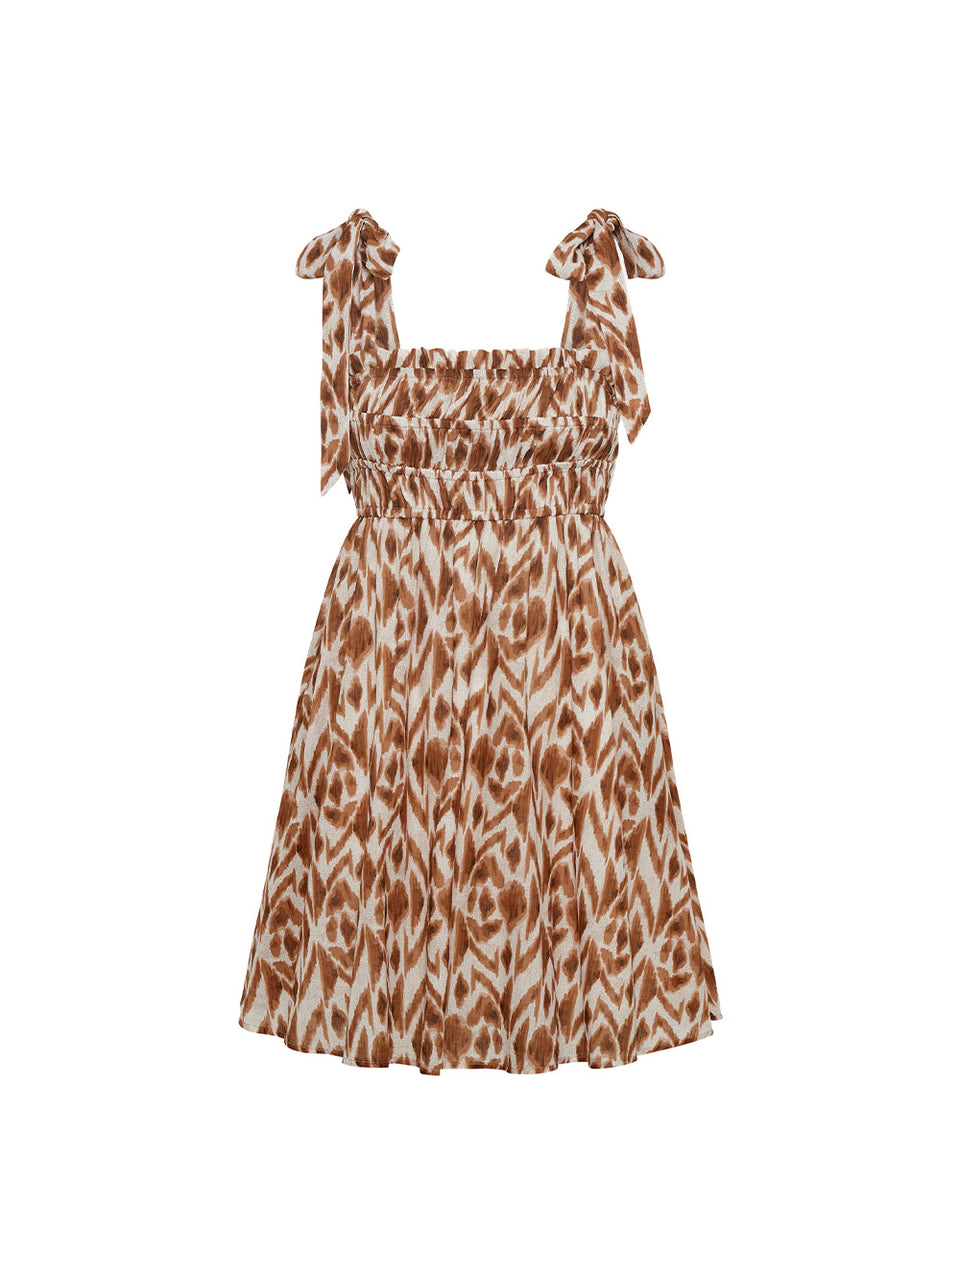 Marisa Strappy Mini Dress KIVARI | Brown and ivory aztek printed mini dress